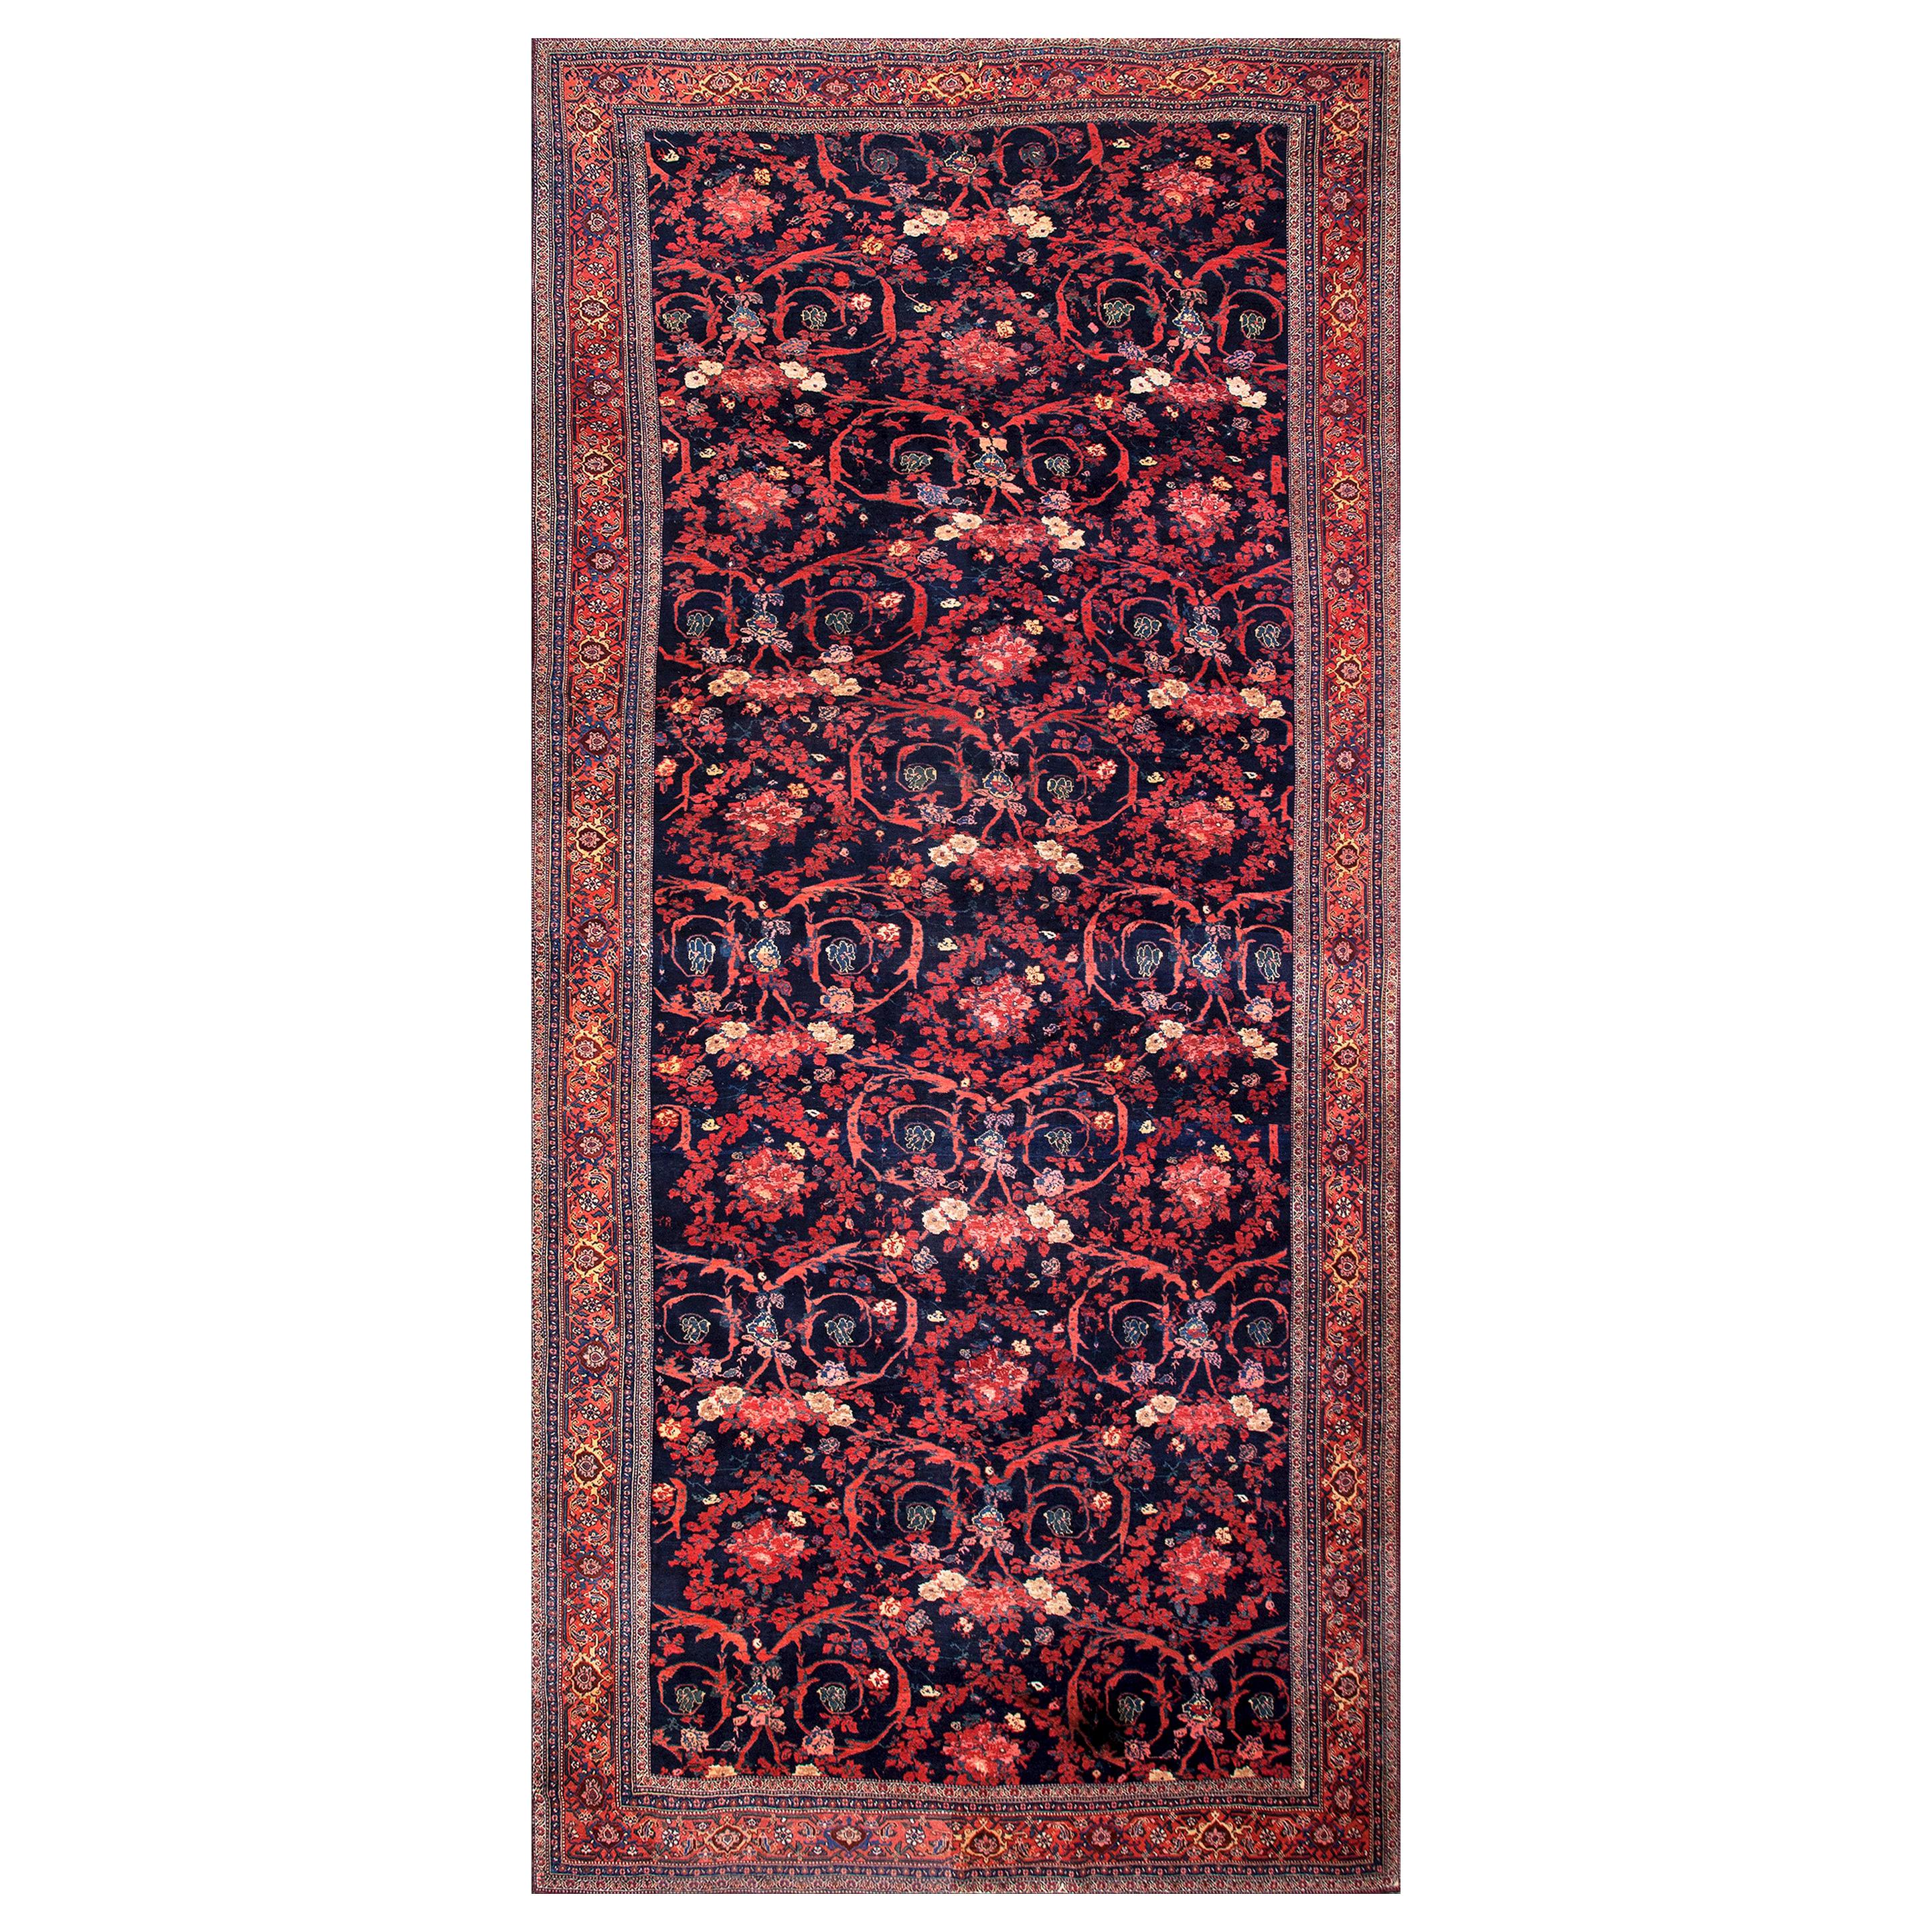 1880s Persian Bijar Carpet With Mostofi Design ( 9'3" x 20'3" - 282 x 617 cm ) For Sale